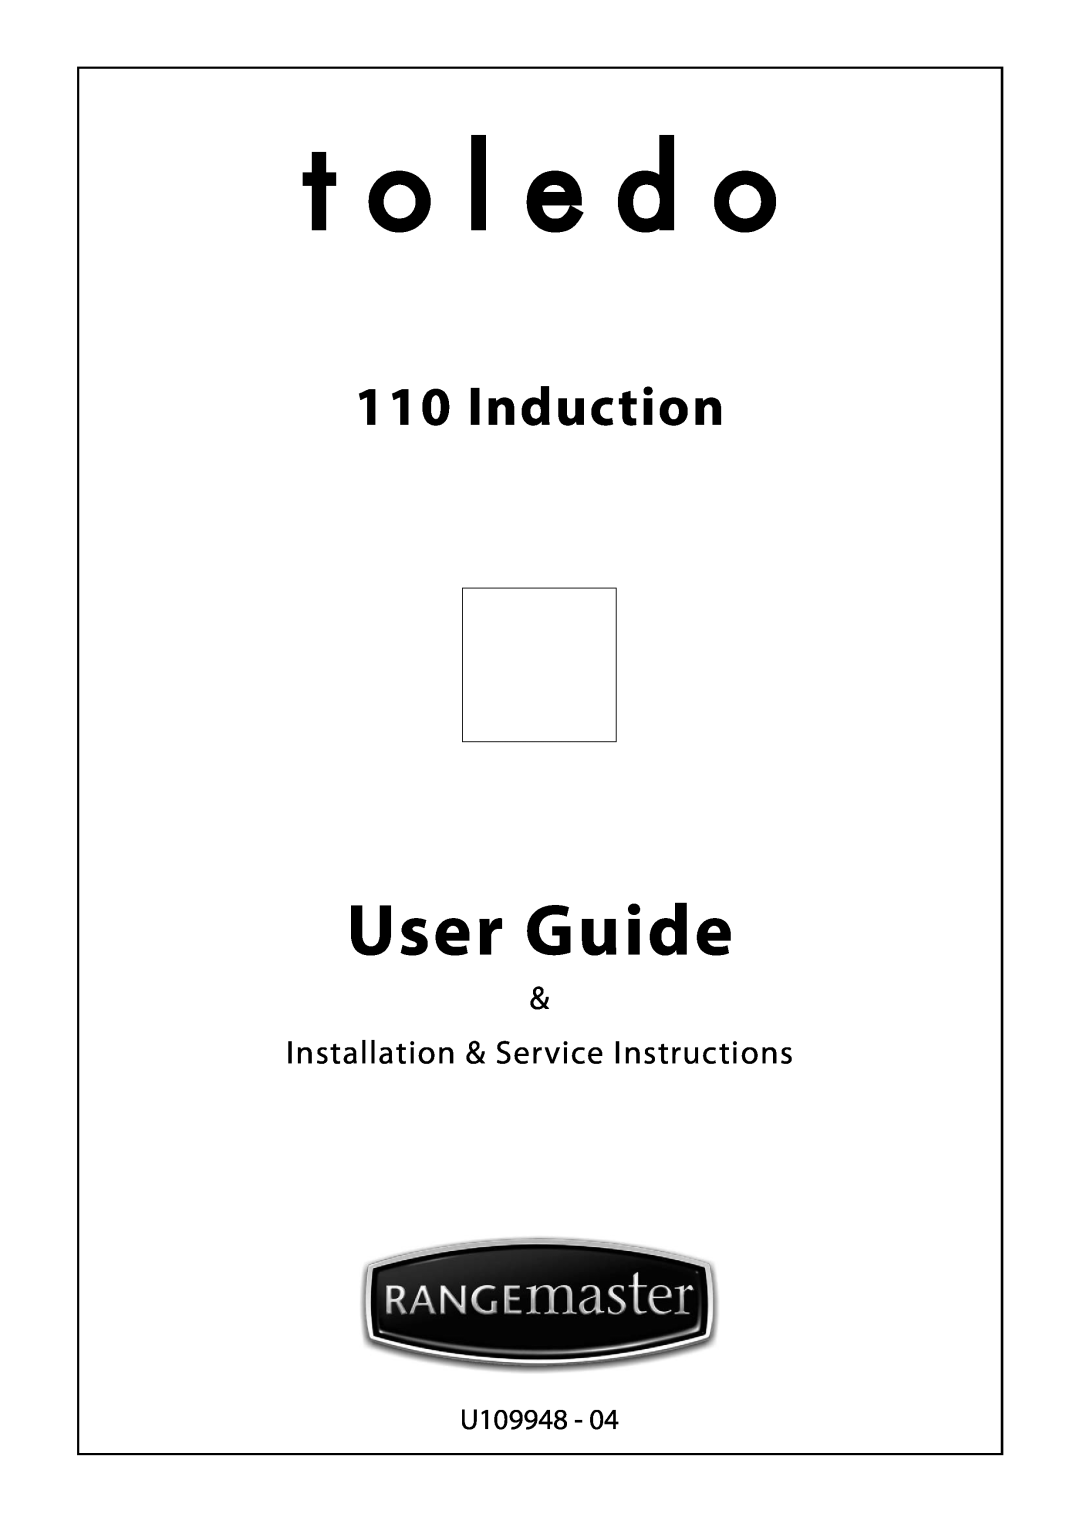 Rangemaster U109948 - 04 manual User Guide, Induction, Installation & Service Instructions, ArtNo.000-0021 Toledo logo 